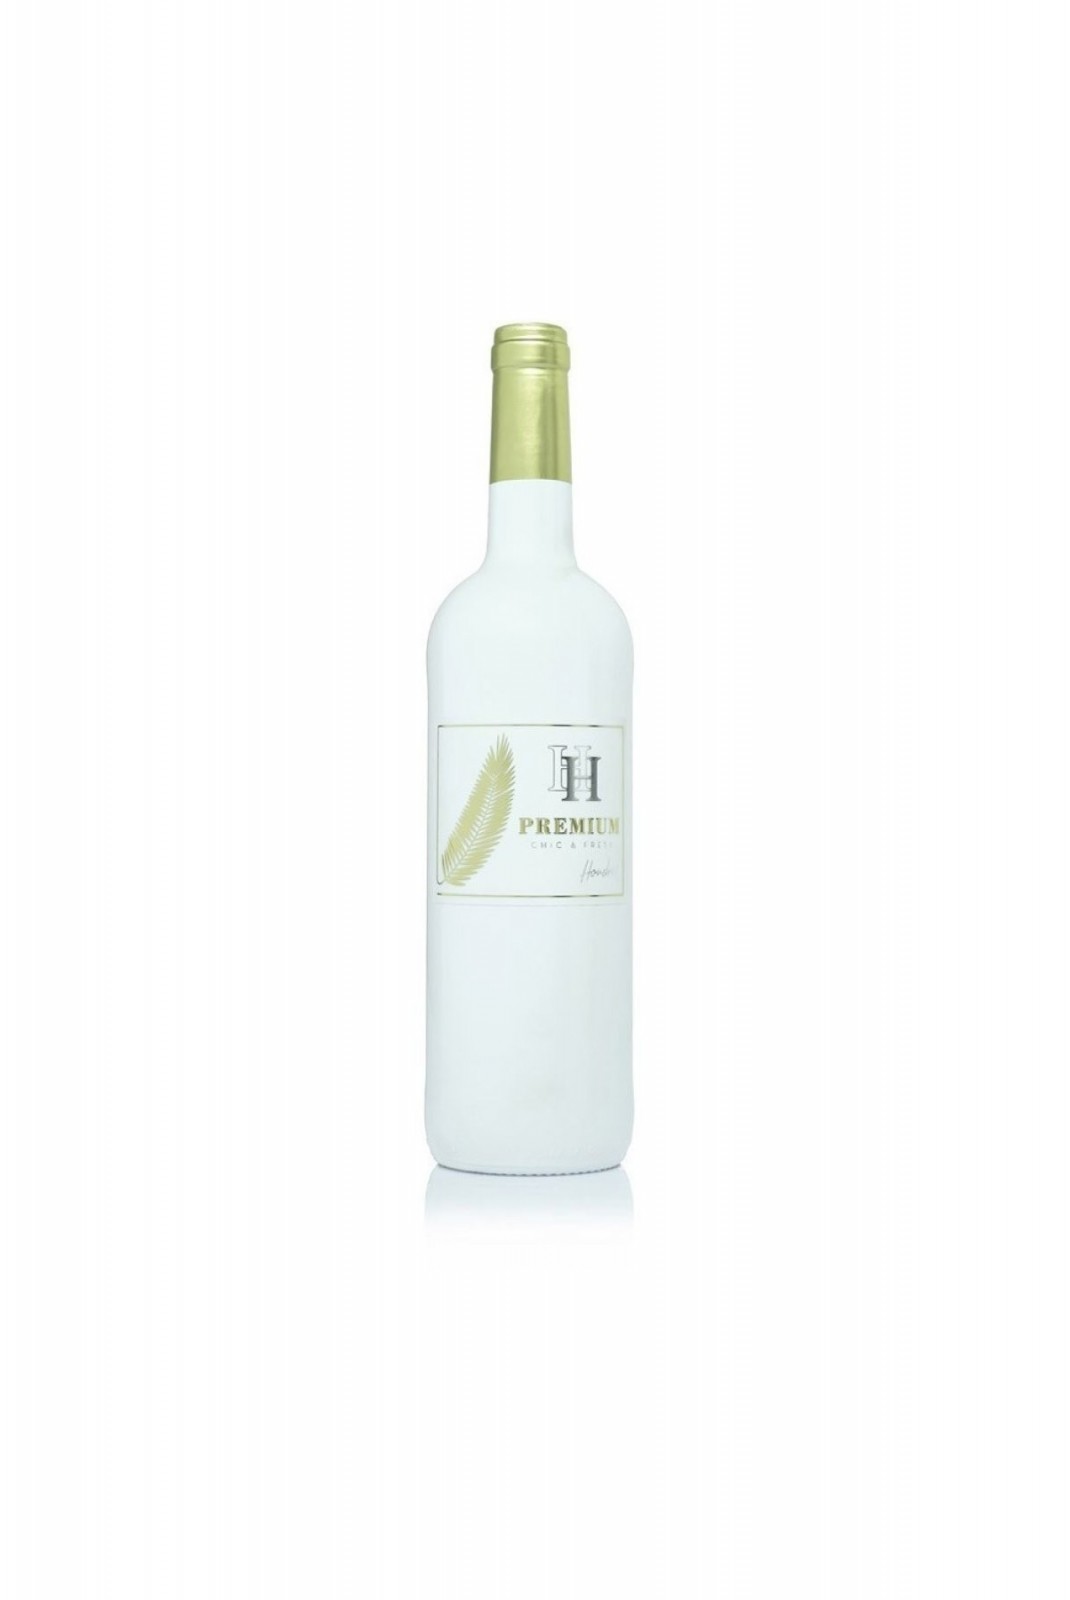 Premium - Rosé - Aop Languedoc - Hondrat - 2021 - 0.75 L x1 DOMAINE D'HONDRAT ROSE HON_PREM75-ROS21-HP